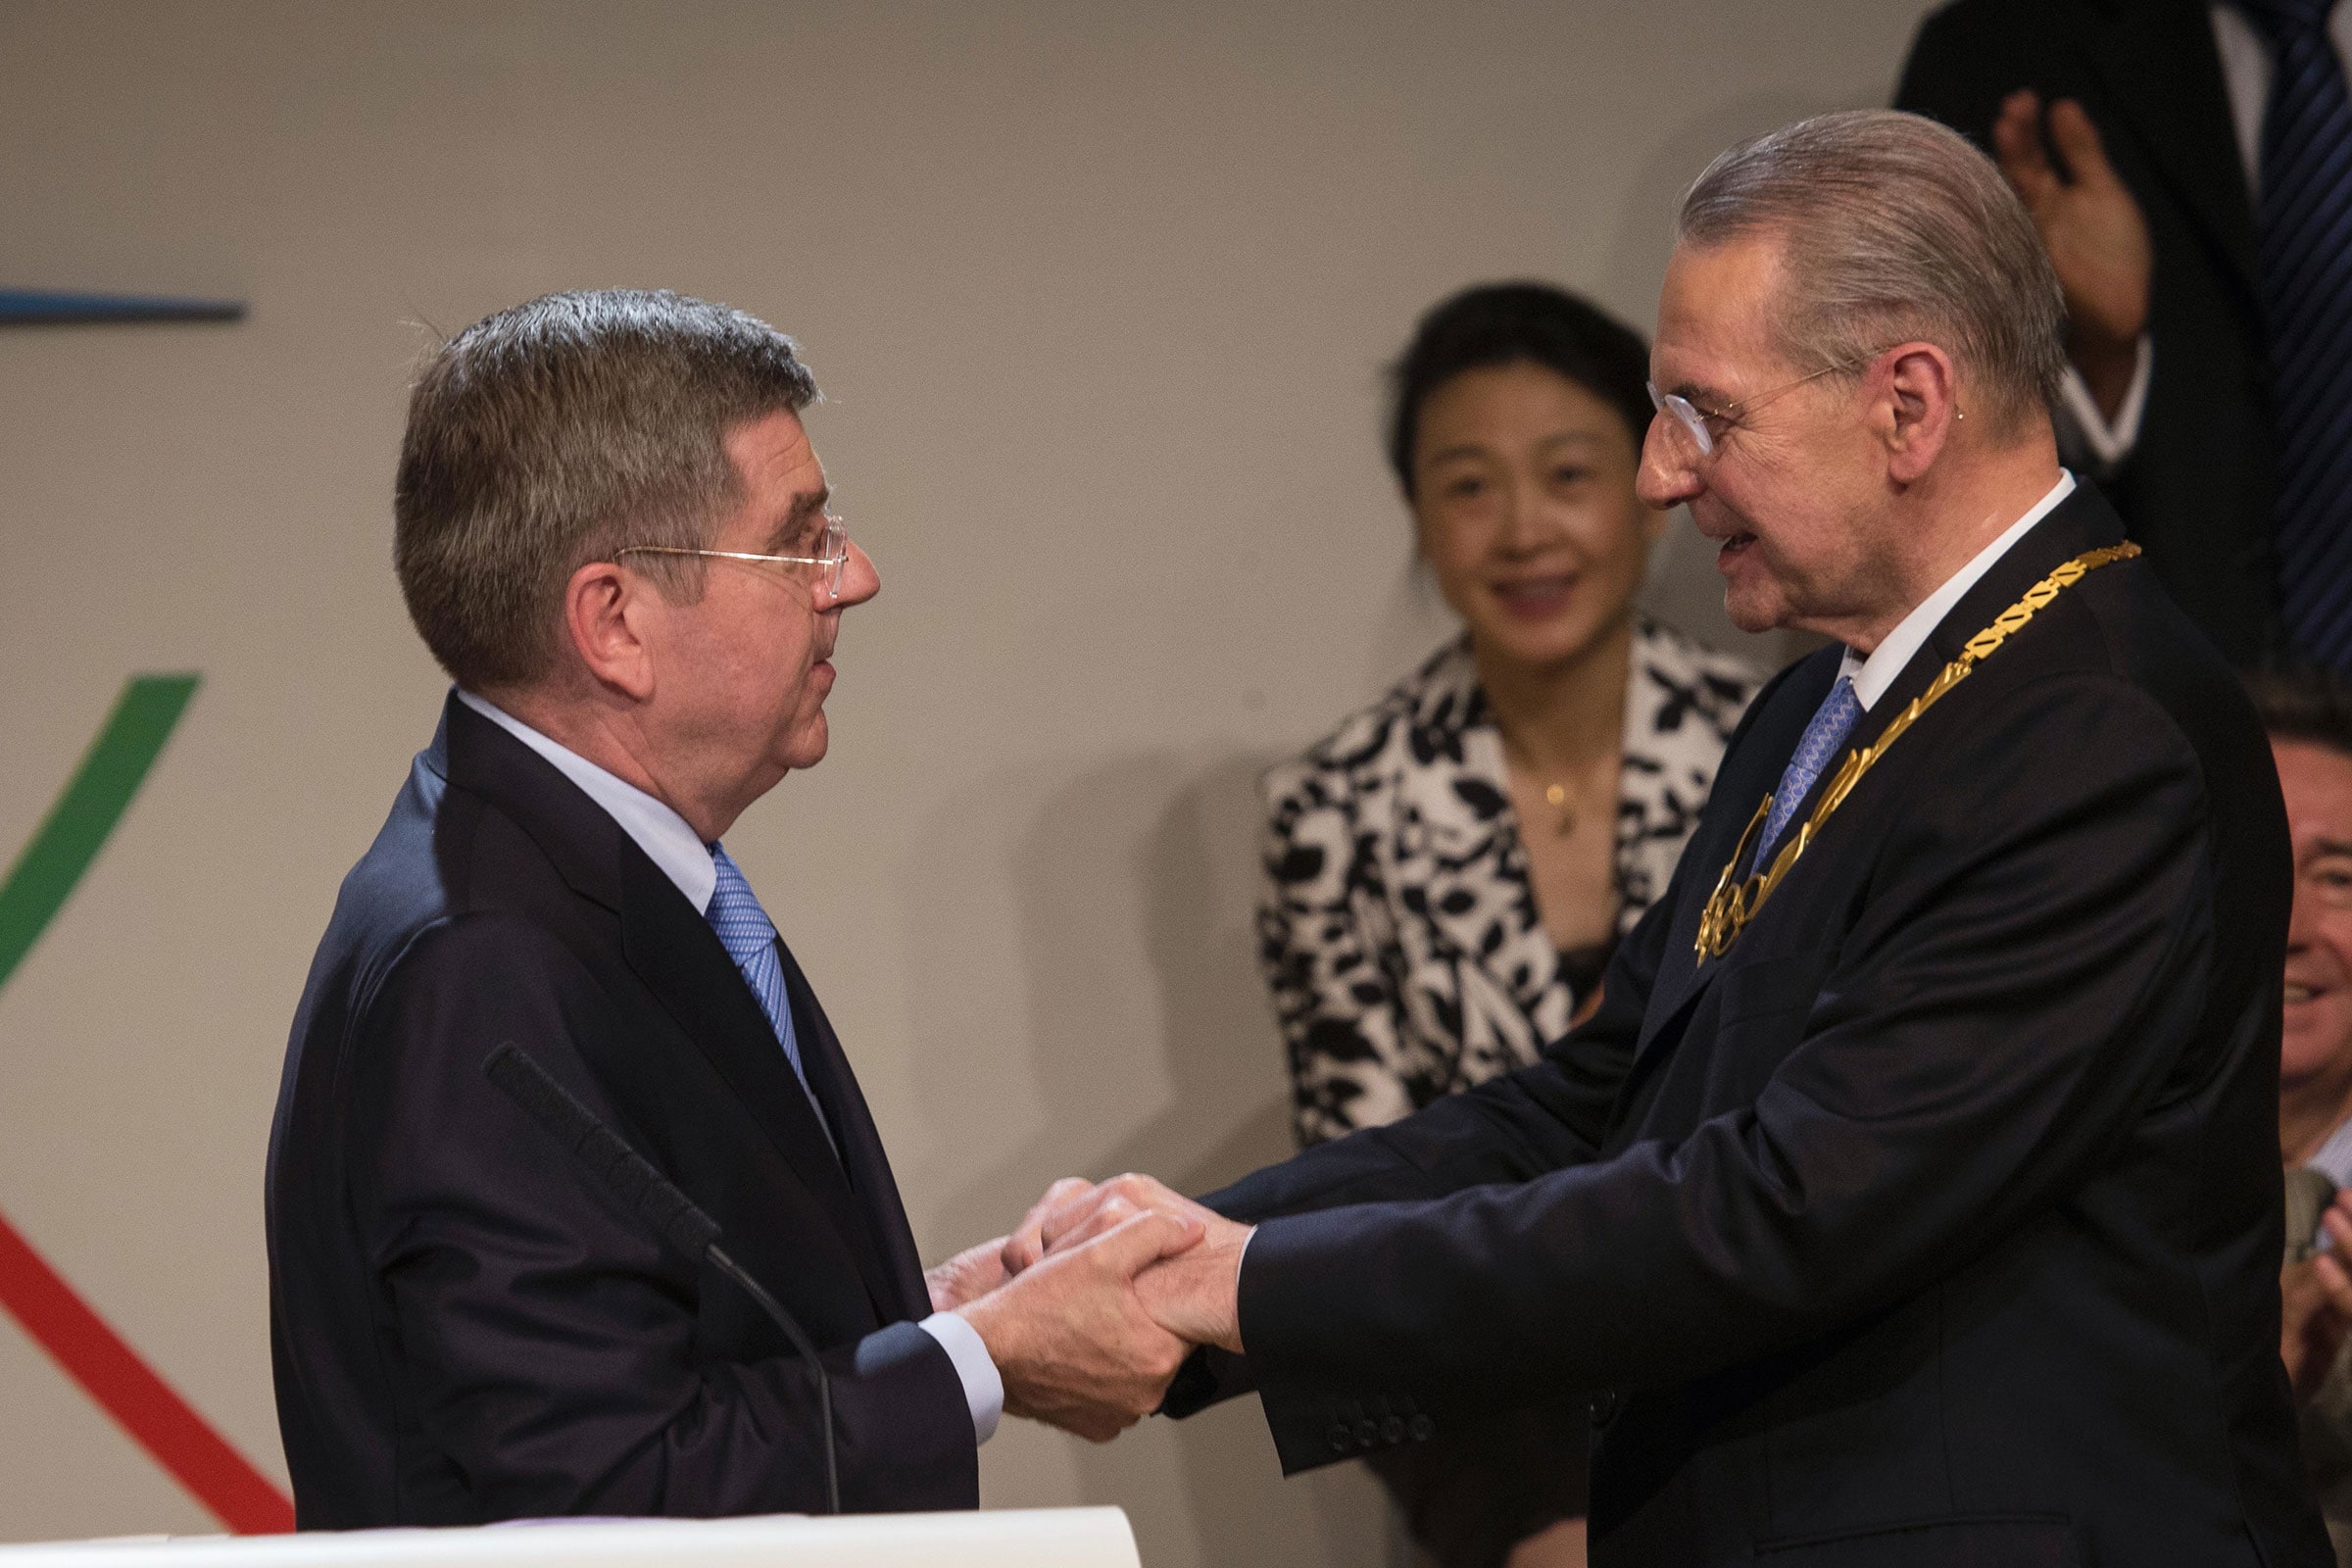 IOC President Thomas Bach and his predecessor, Jacques Rogge